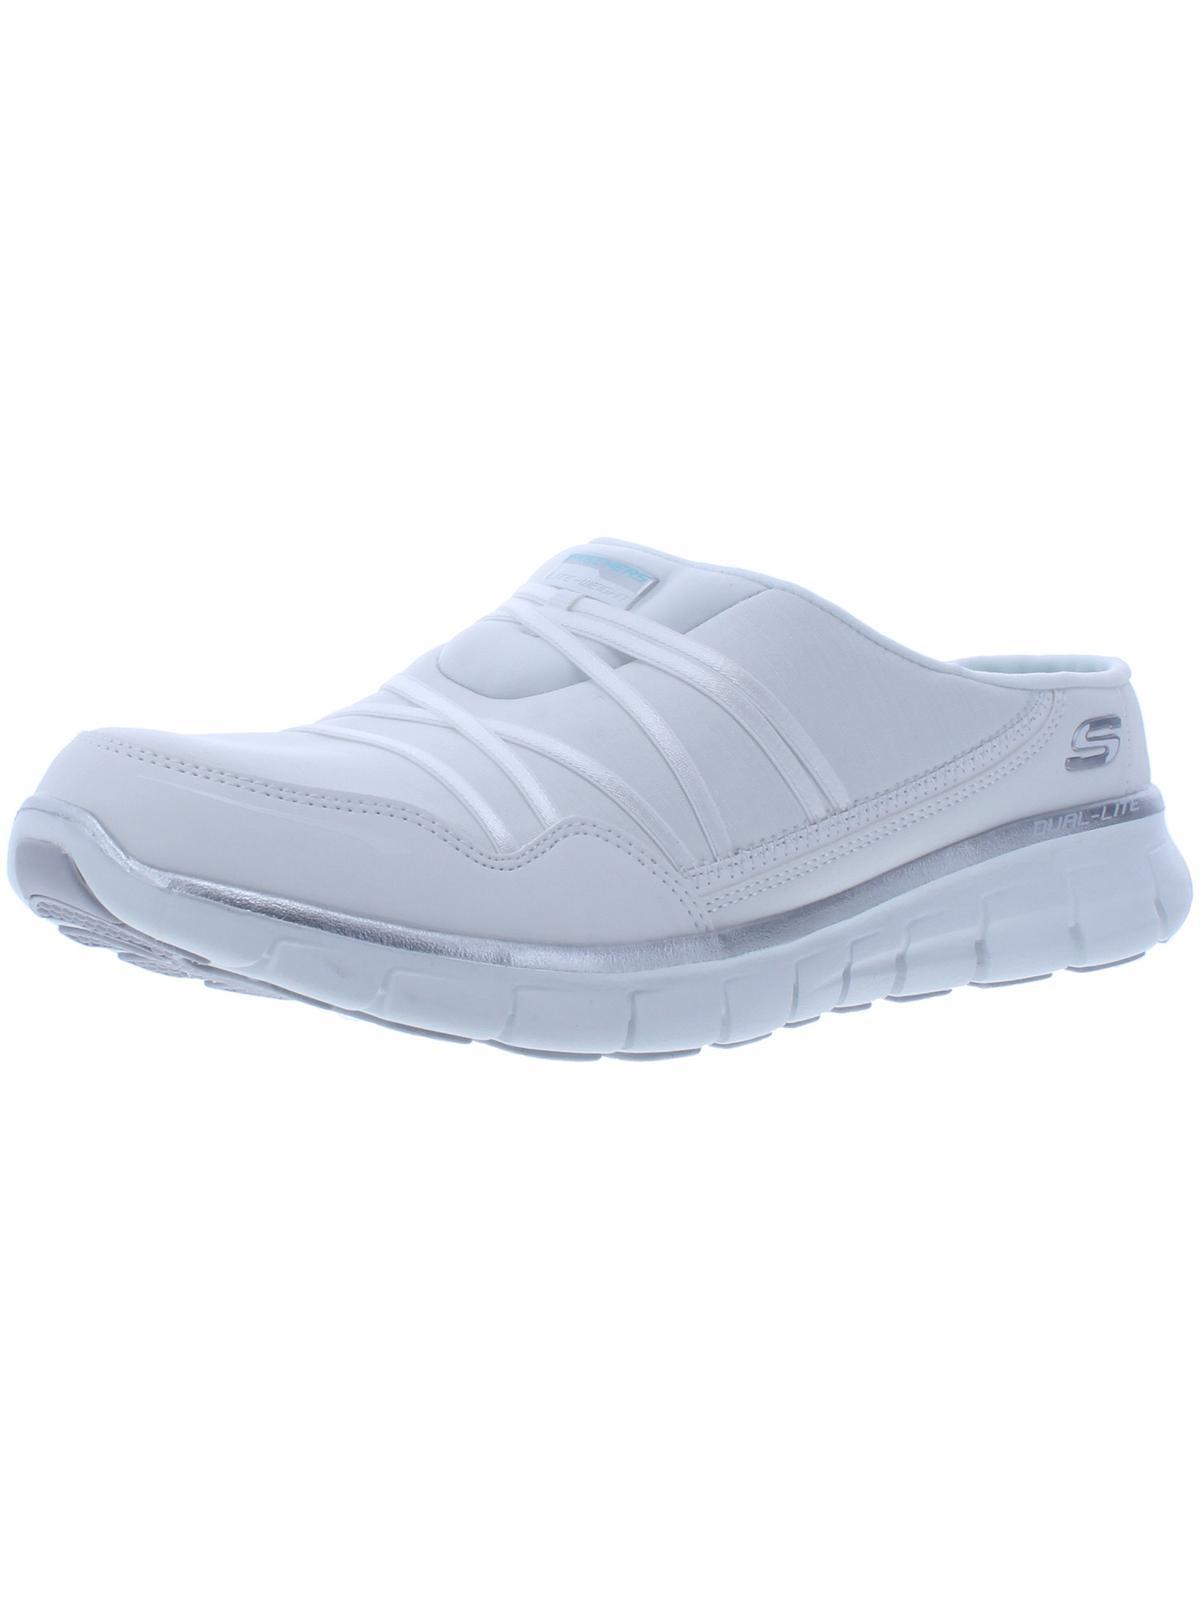 Skechers Air Streamer Memory Foam Lightweight Athletic Shoes in |